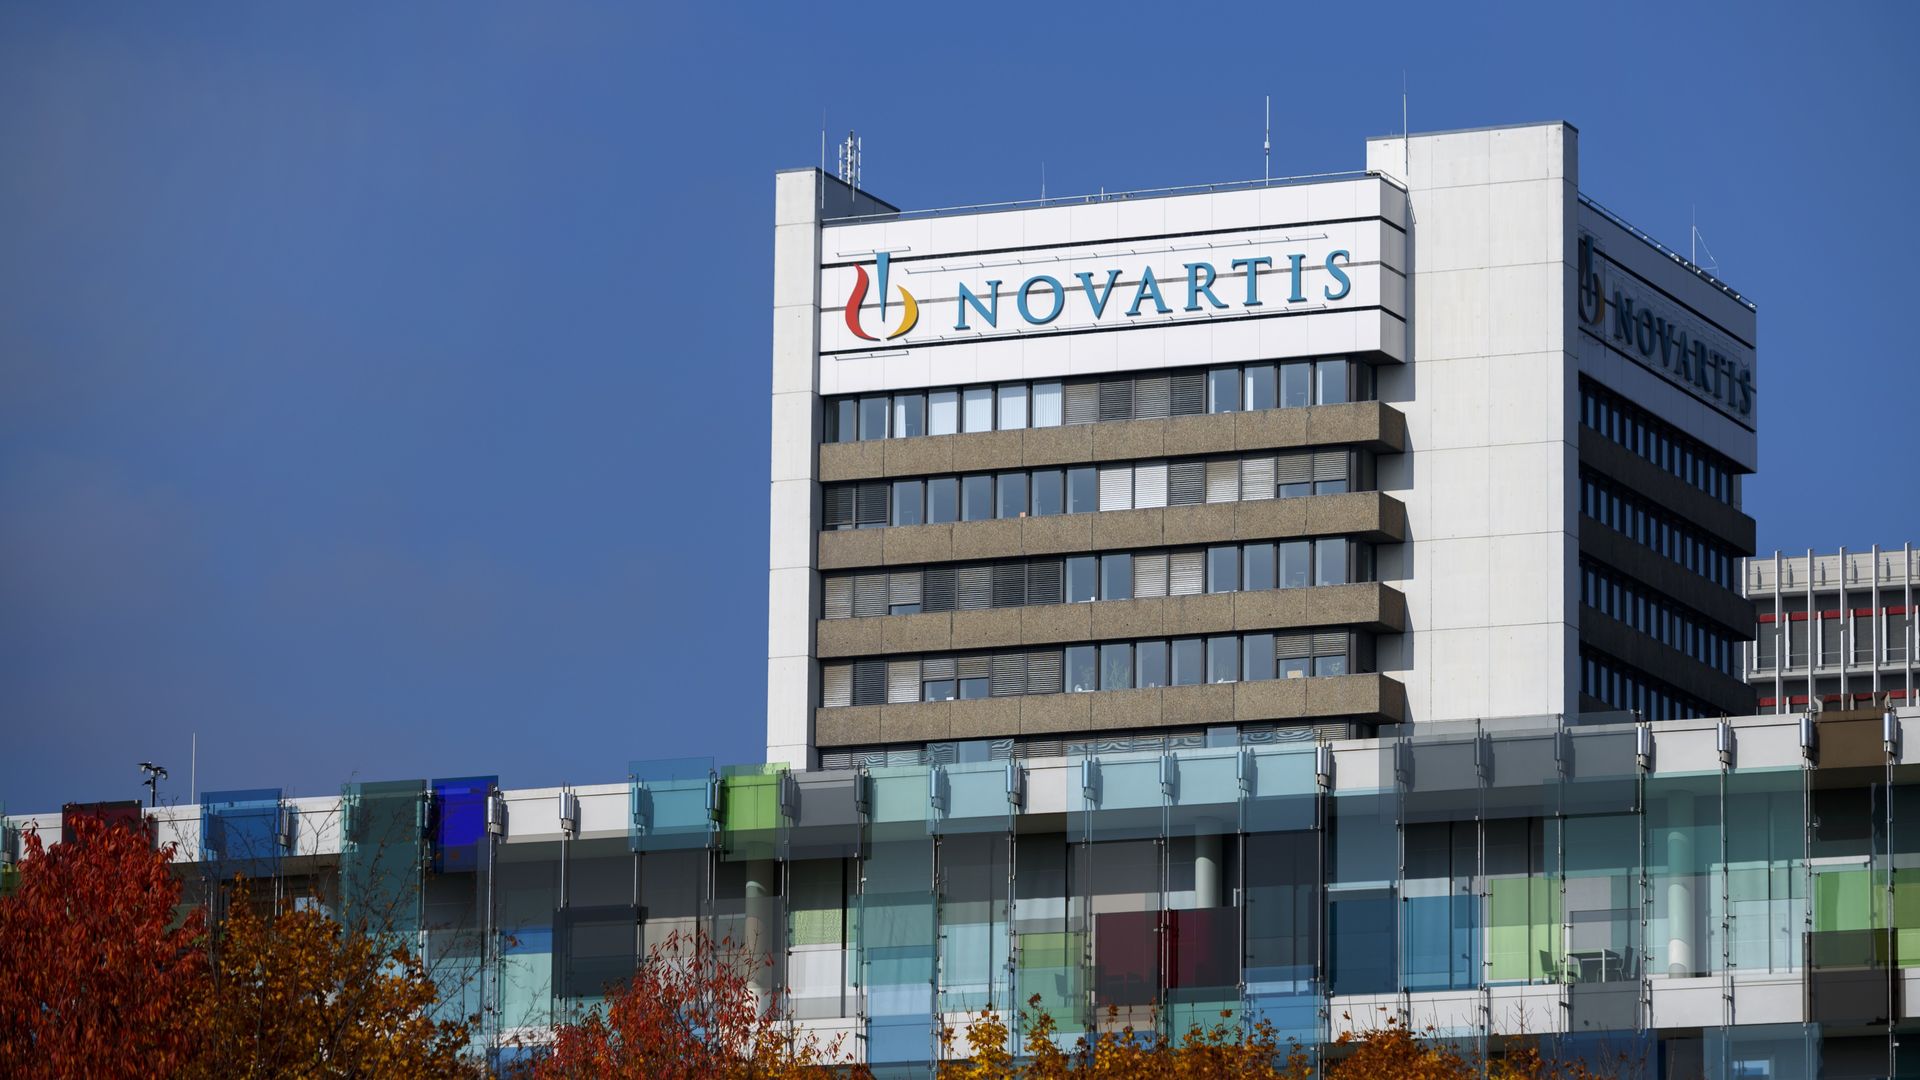 The Novartis headquarters building in Switzerland.